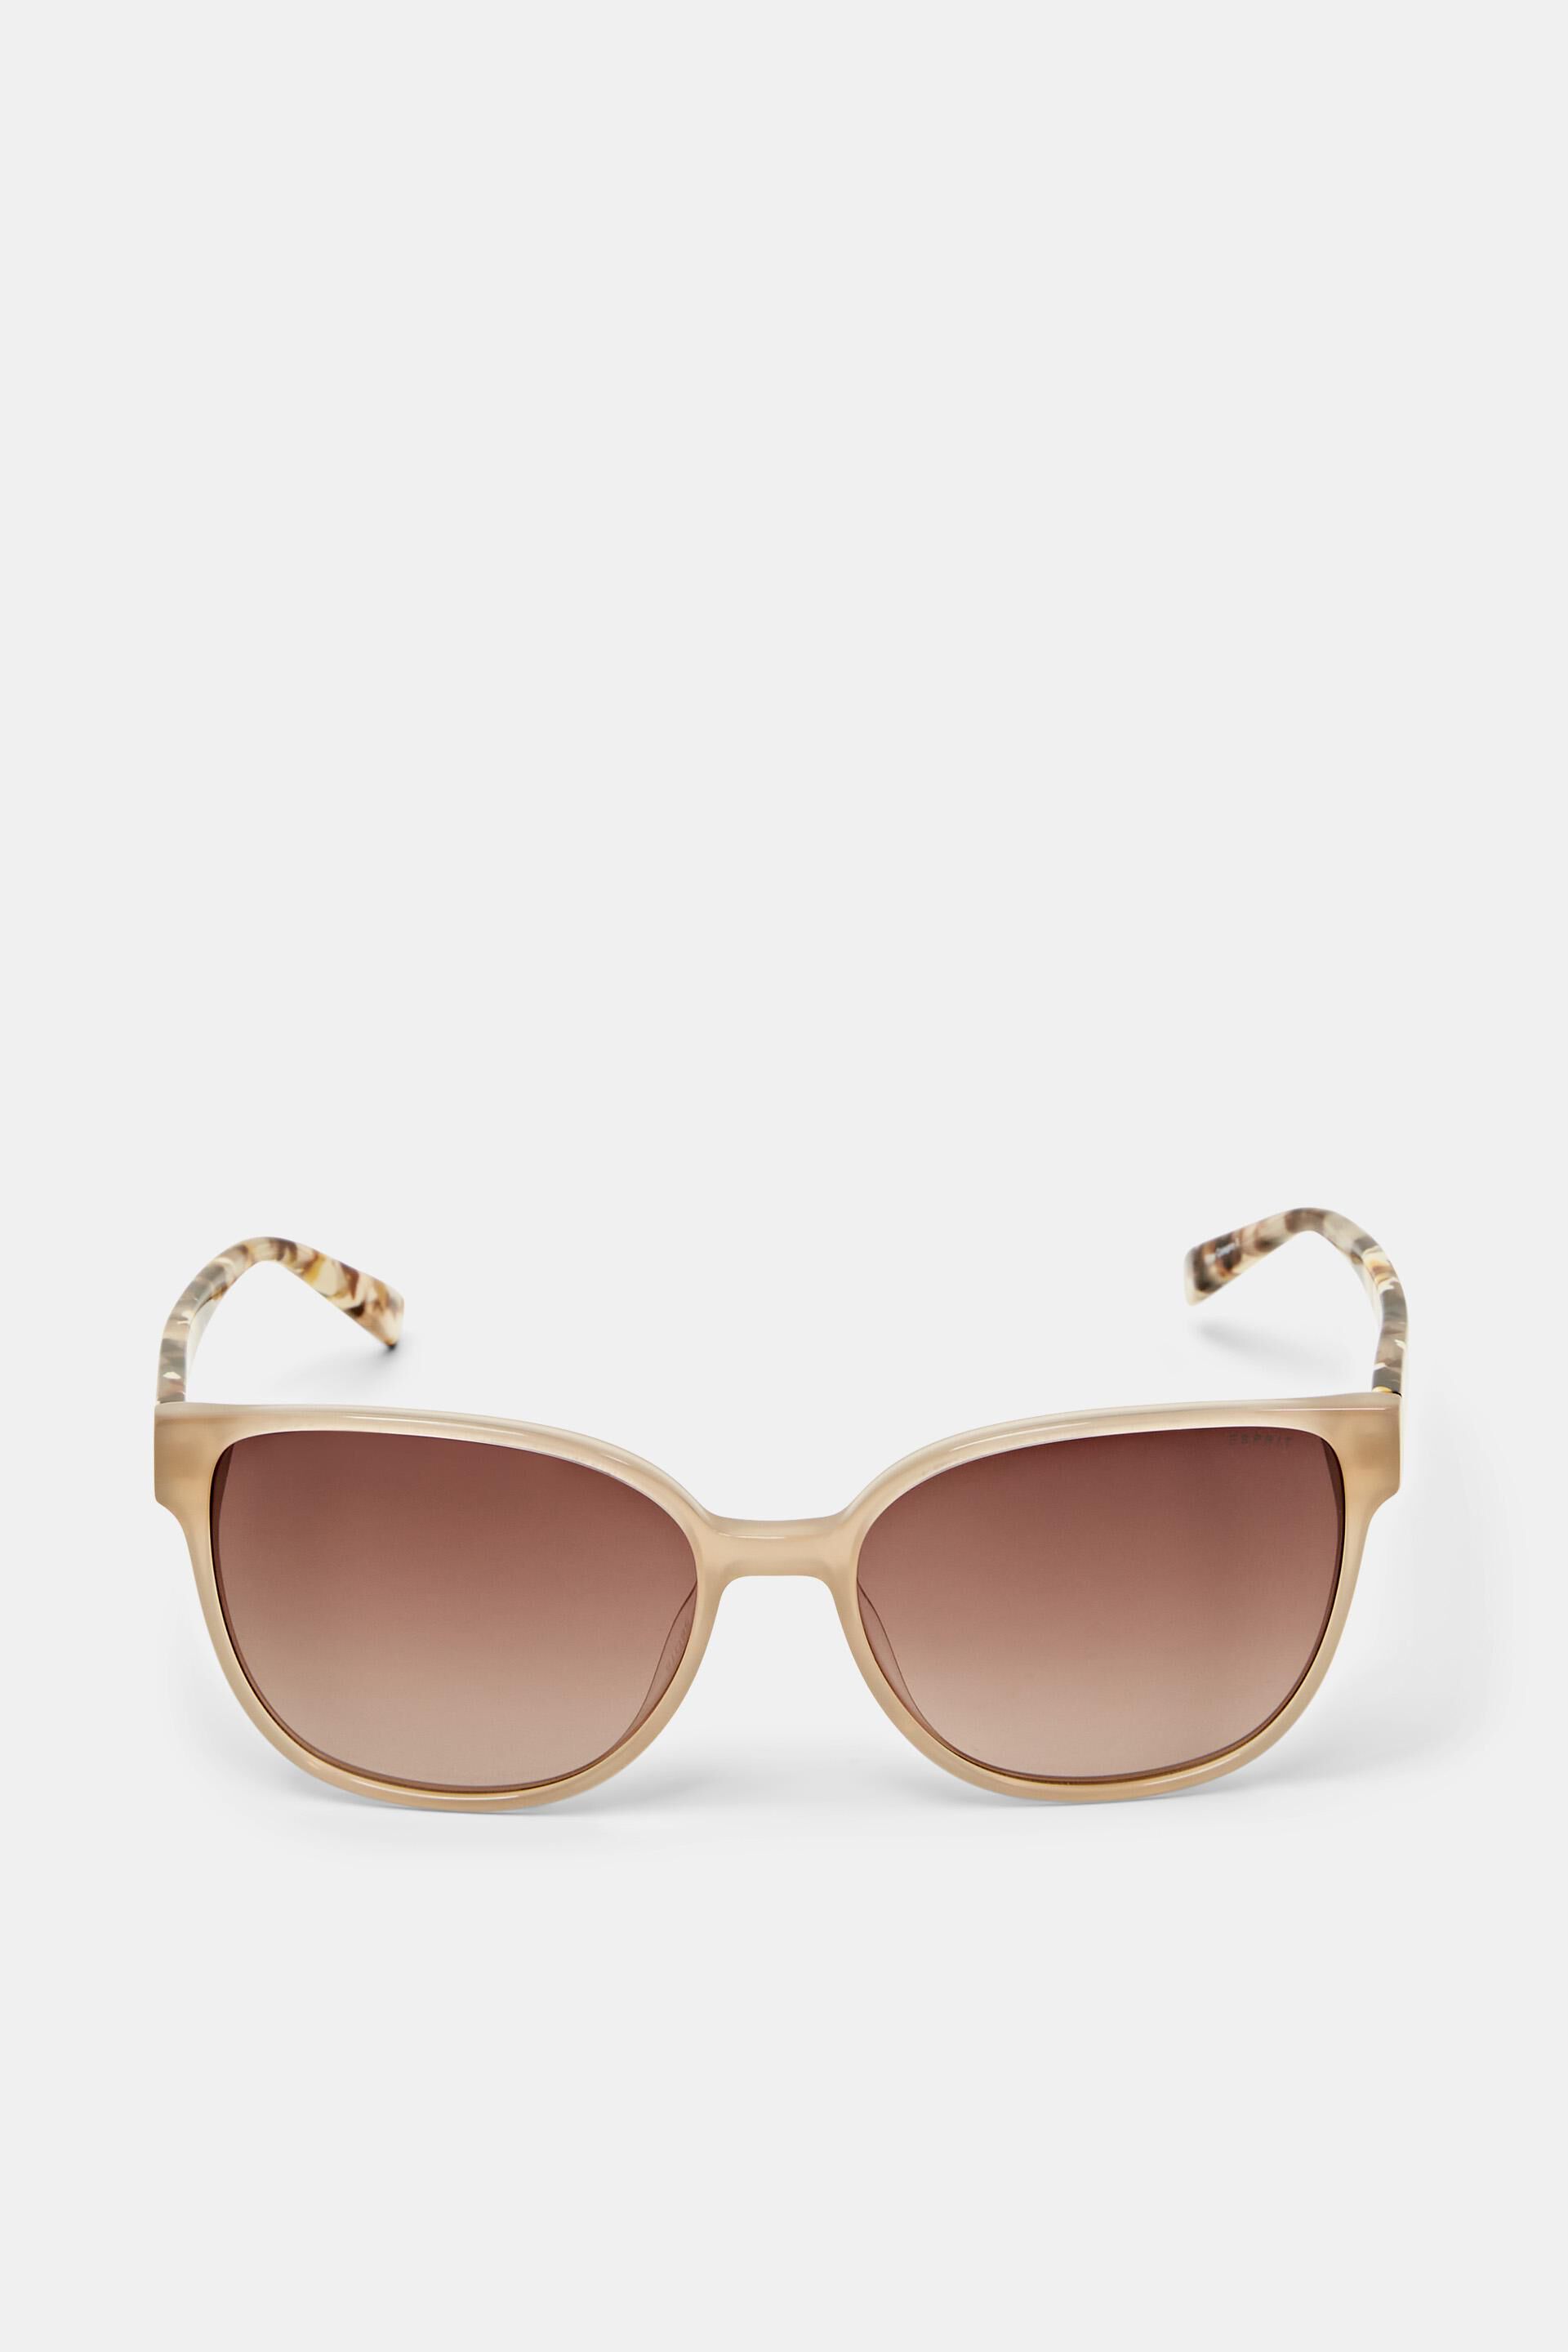 Square framed sunglasses